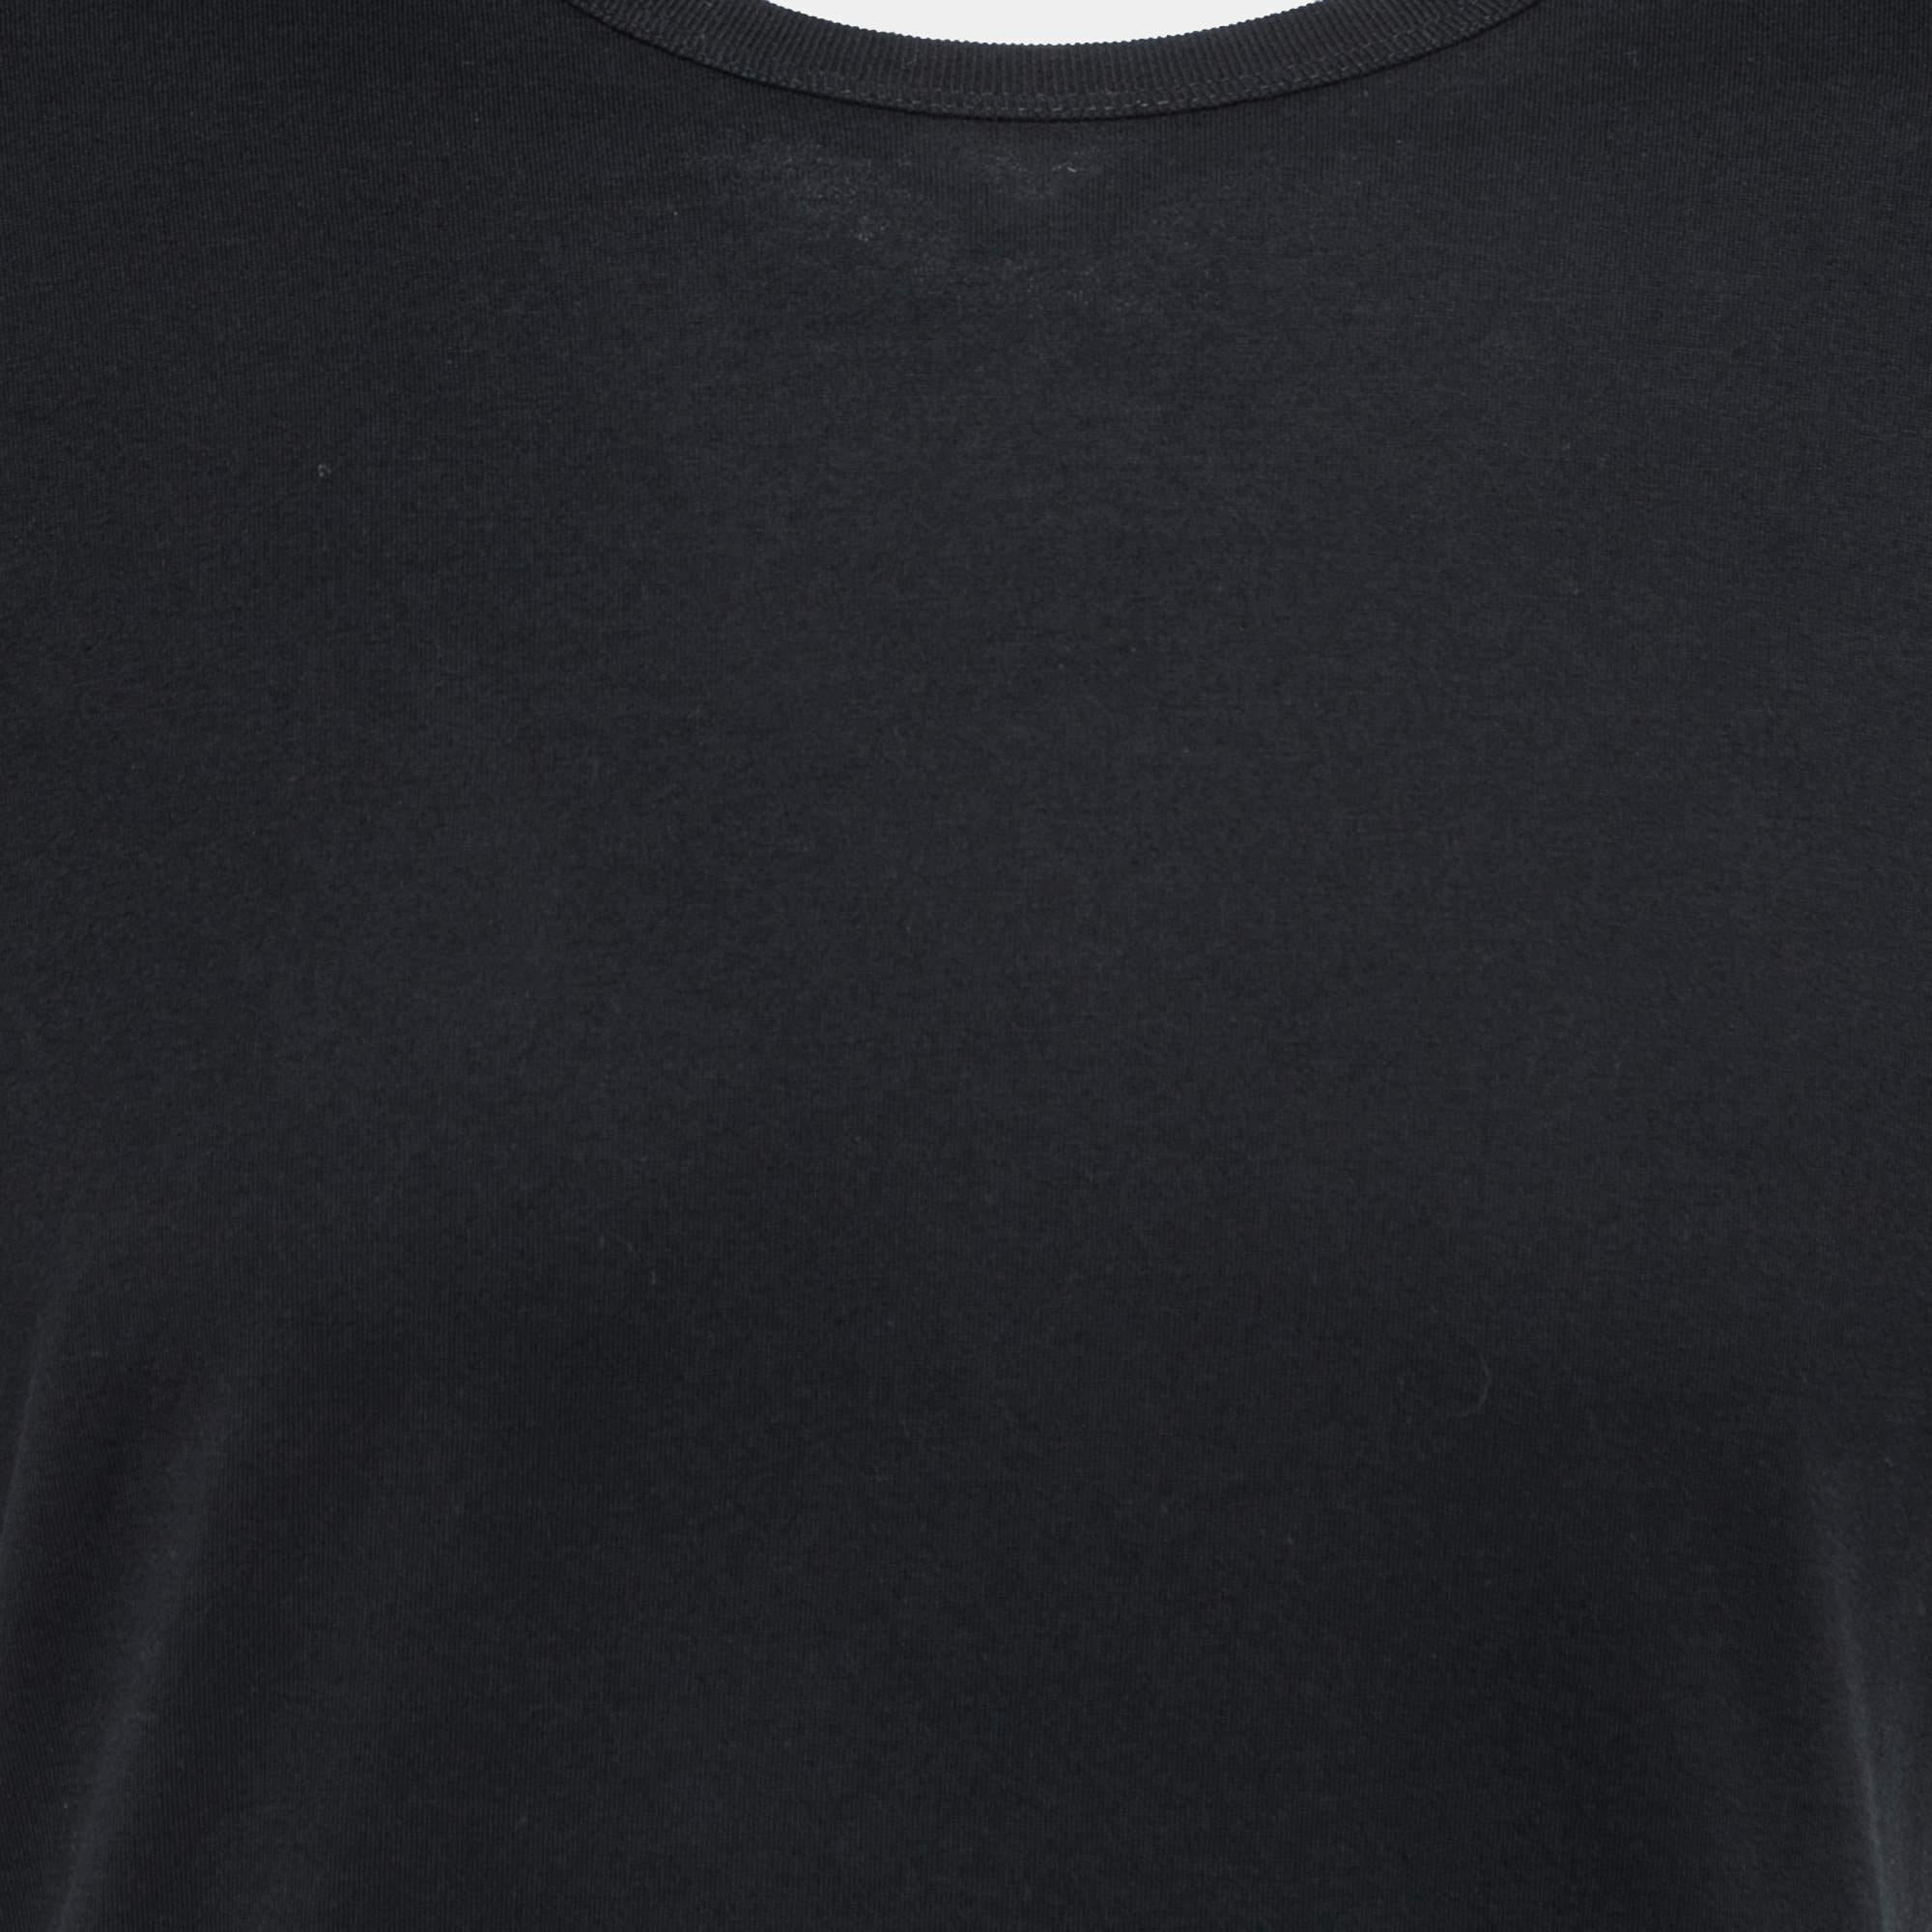 Dolce & Gabbana Black Cotton Crew Neck Half Sleeve T-Shirt S In Good Condition For Sale In Dubai, Al Qouz 2